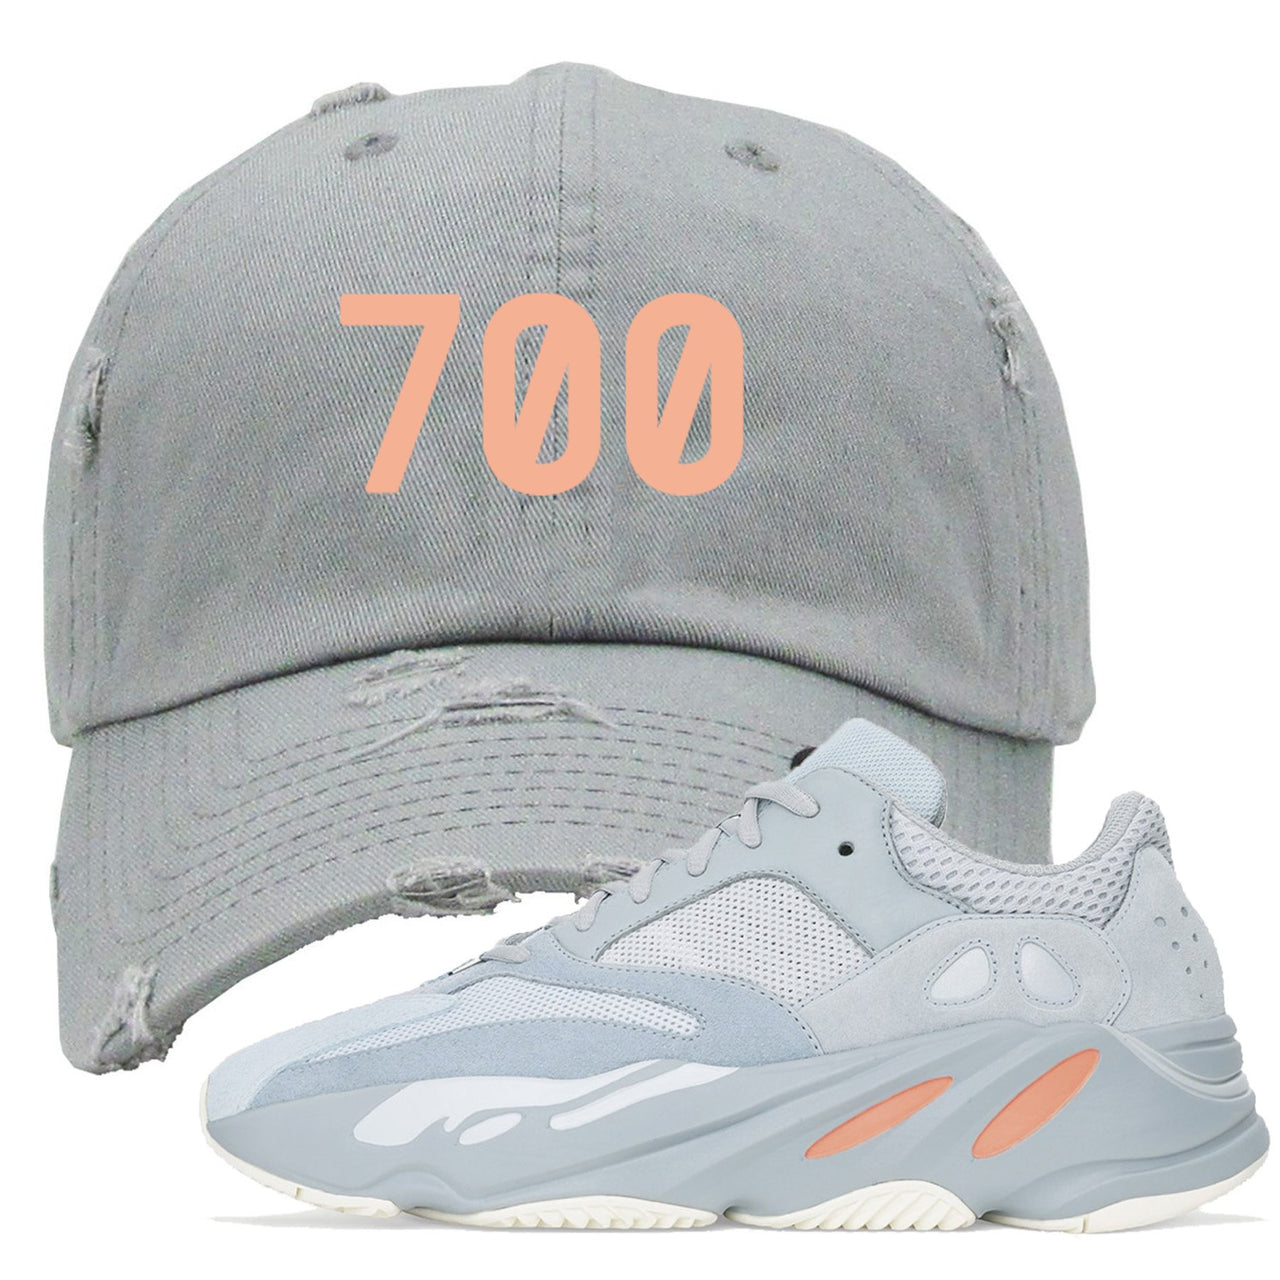 Inertia 700s Distressed Dad Hat | 700, Light Gray